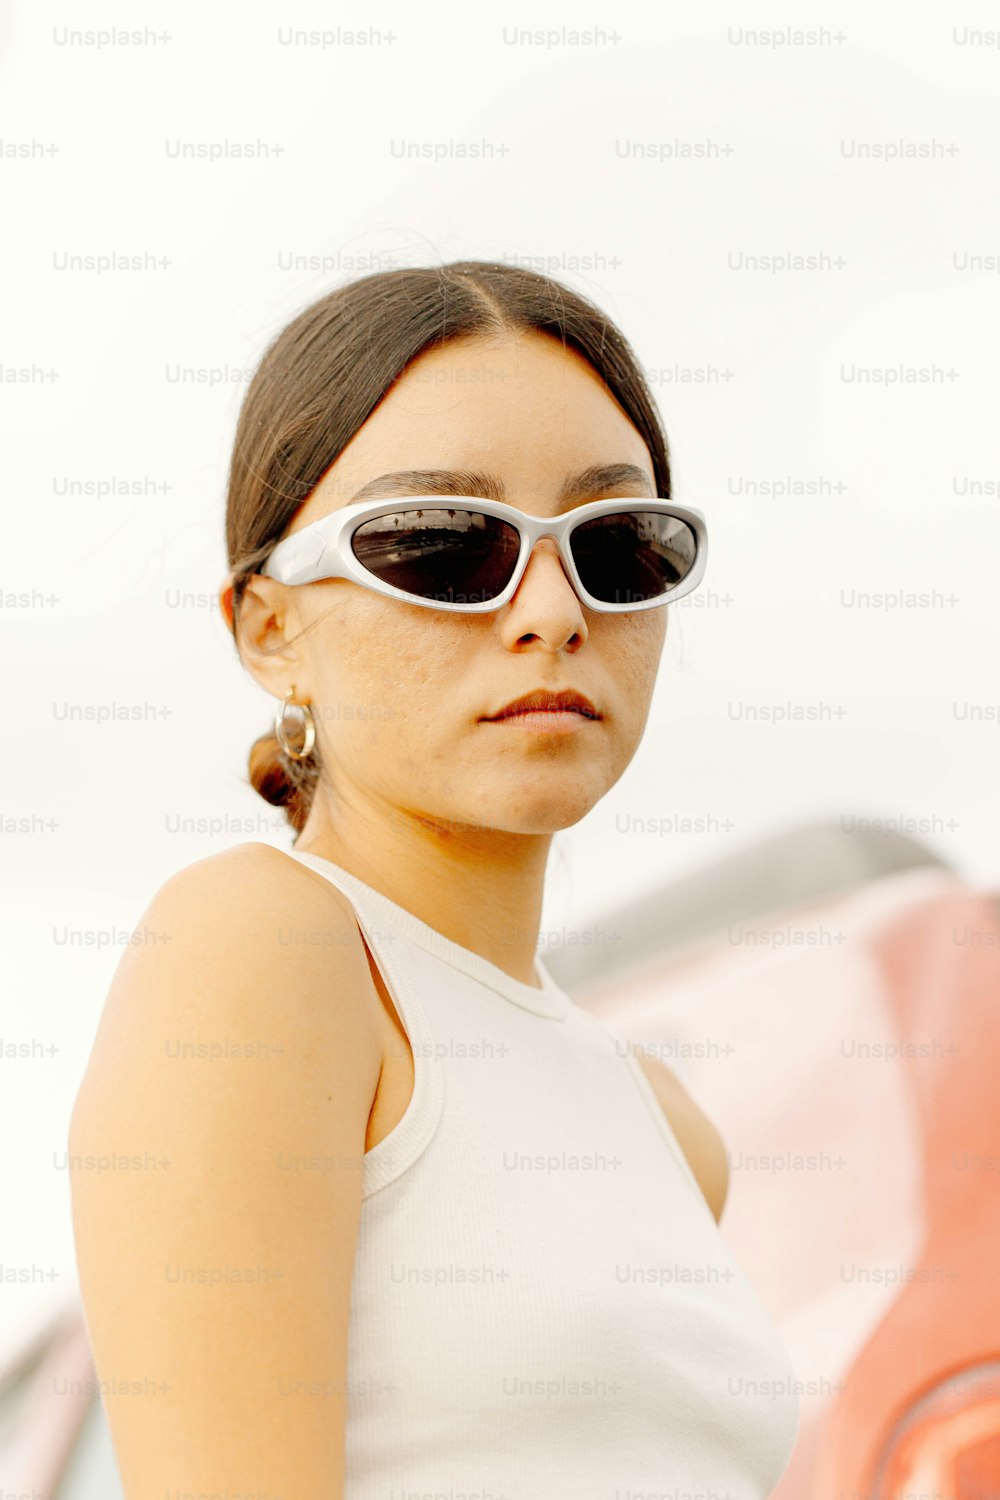 Una donna che indossa occhiali da sole in piedi davanti a una macchina